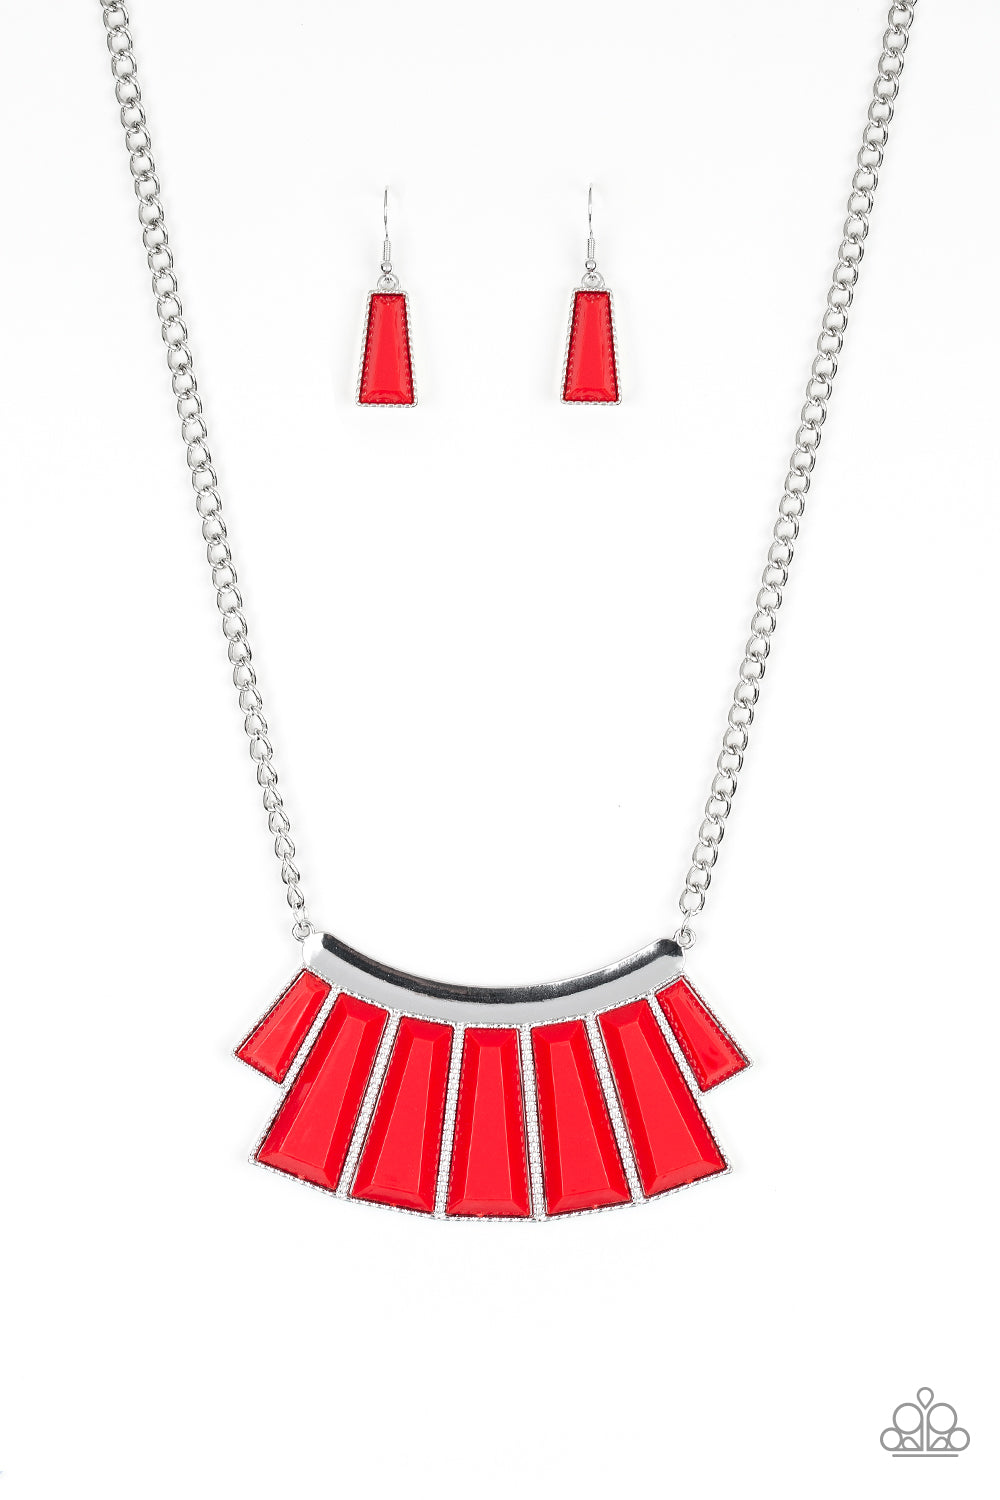 Paparazzi necklace - Glamour Goddess - Red